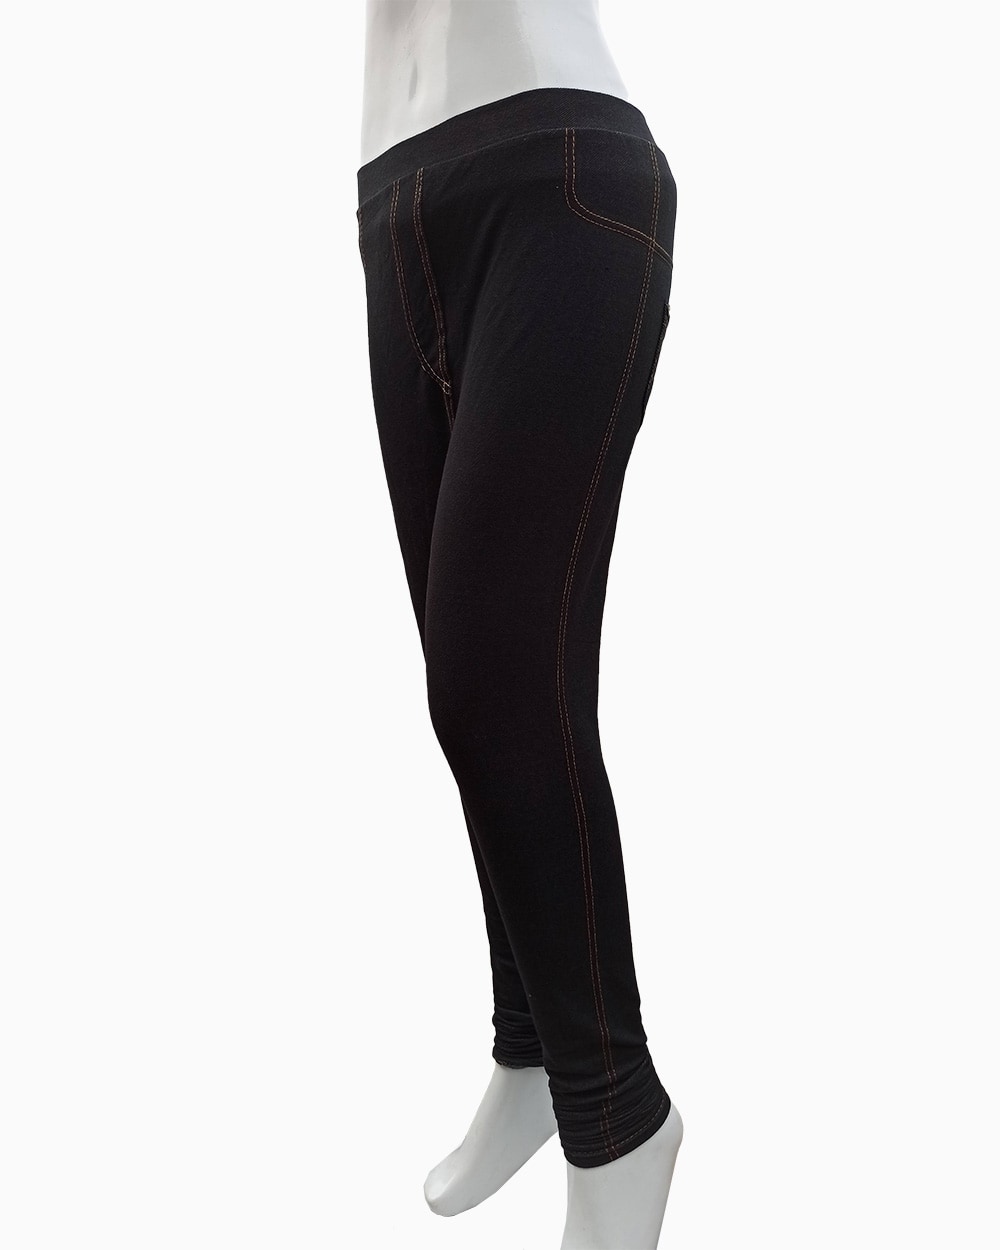 female denim pants-back 2 pockets-stretchable denim pants (8)-black pants